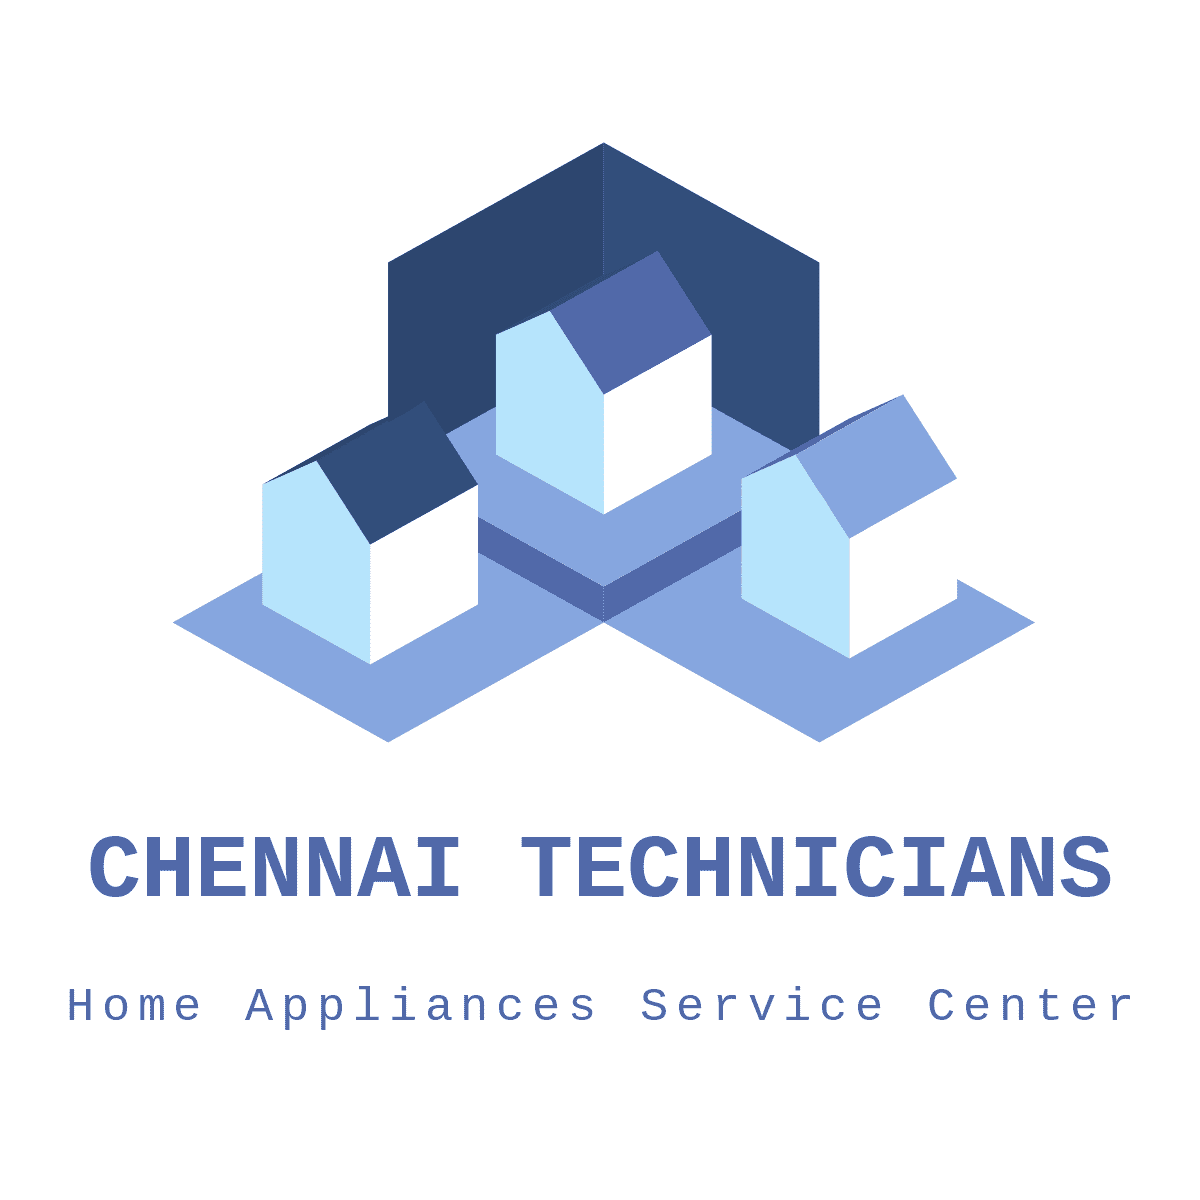 Chennai Technicians